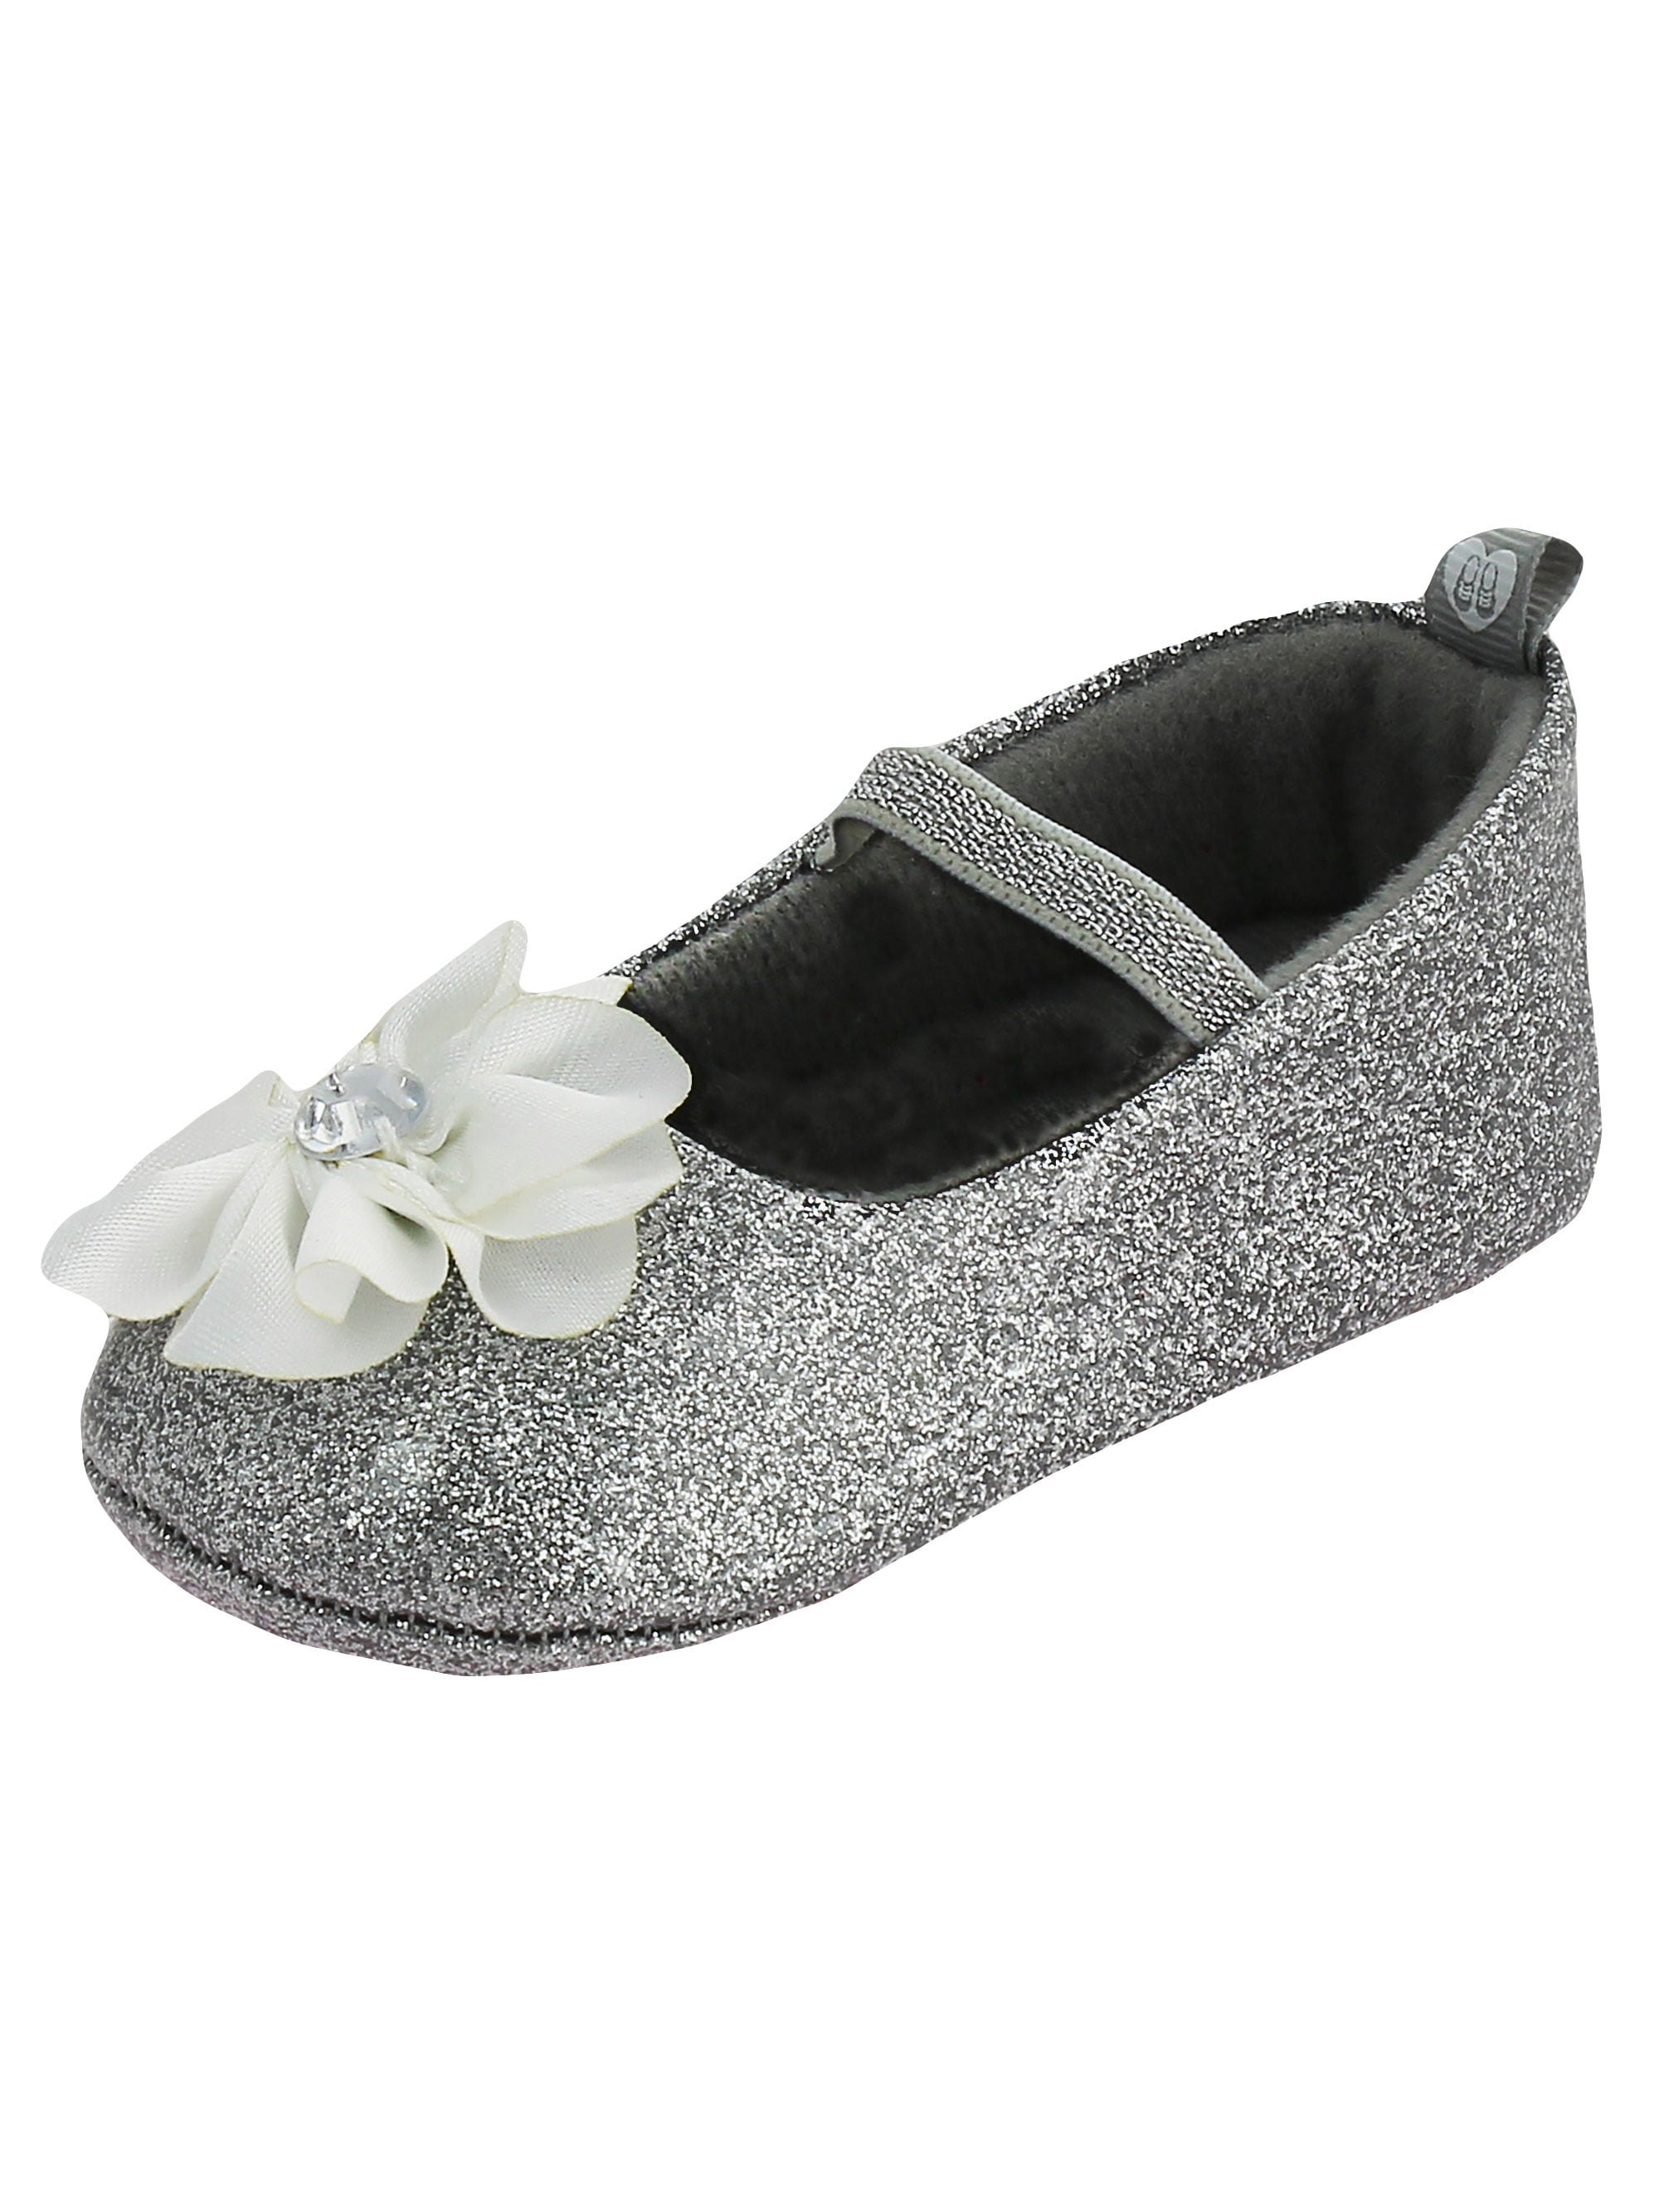 silver infant shoes